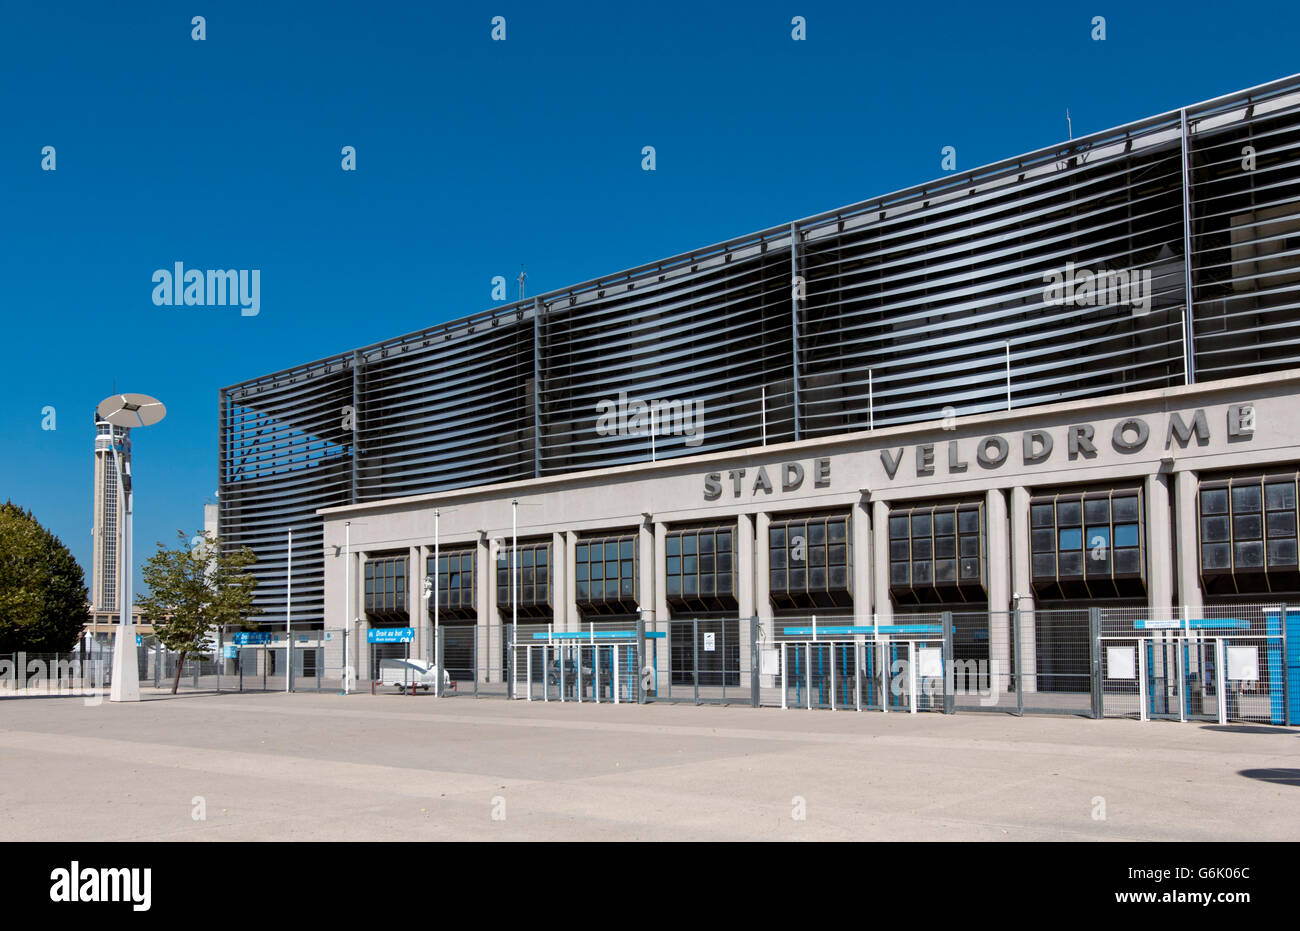 Stade Velodrome, Olympique Marseille stadium, Marseille, Marseilles, Bouche-du-Rhone, Provence, France, Europe Stock Photo